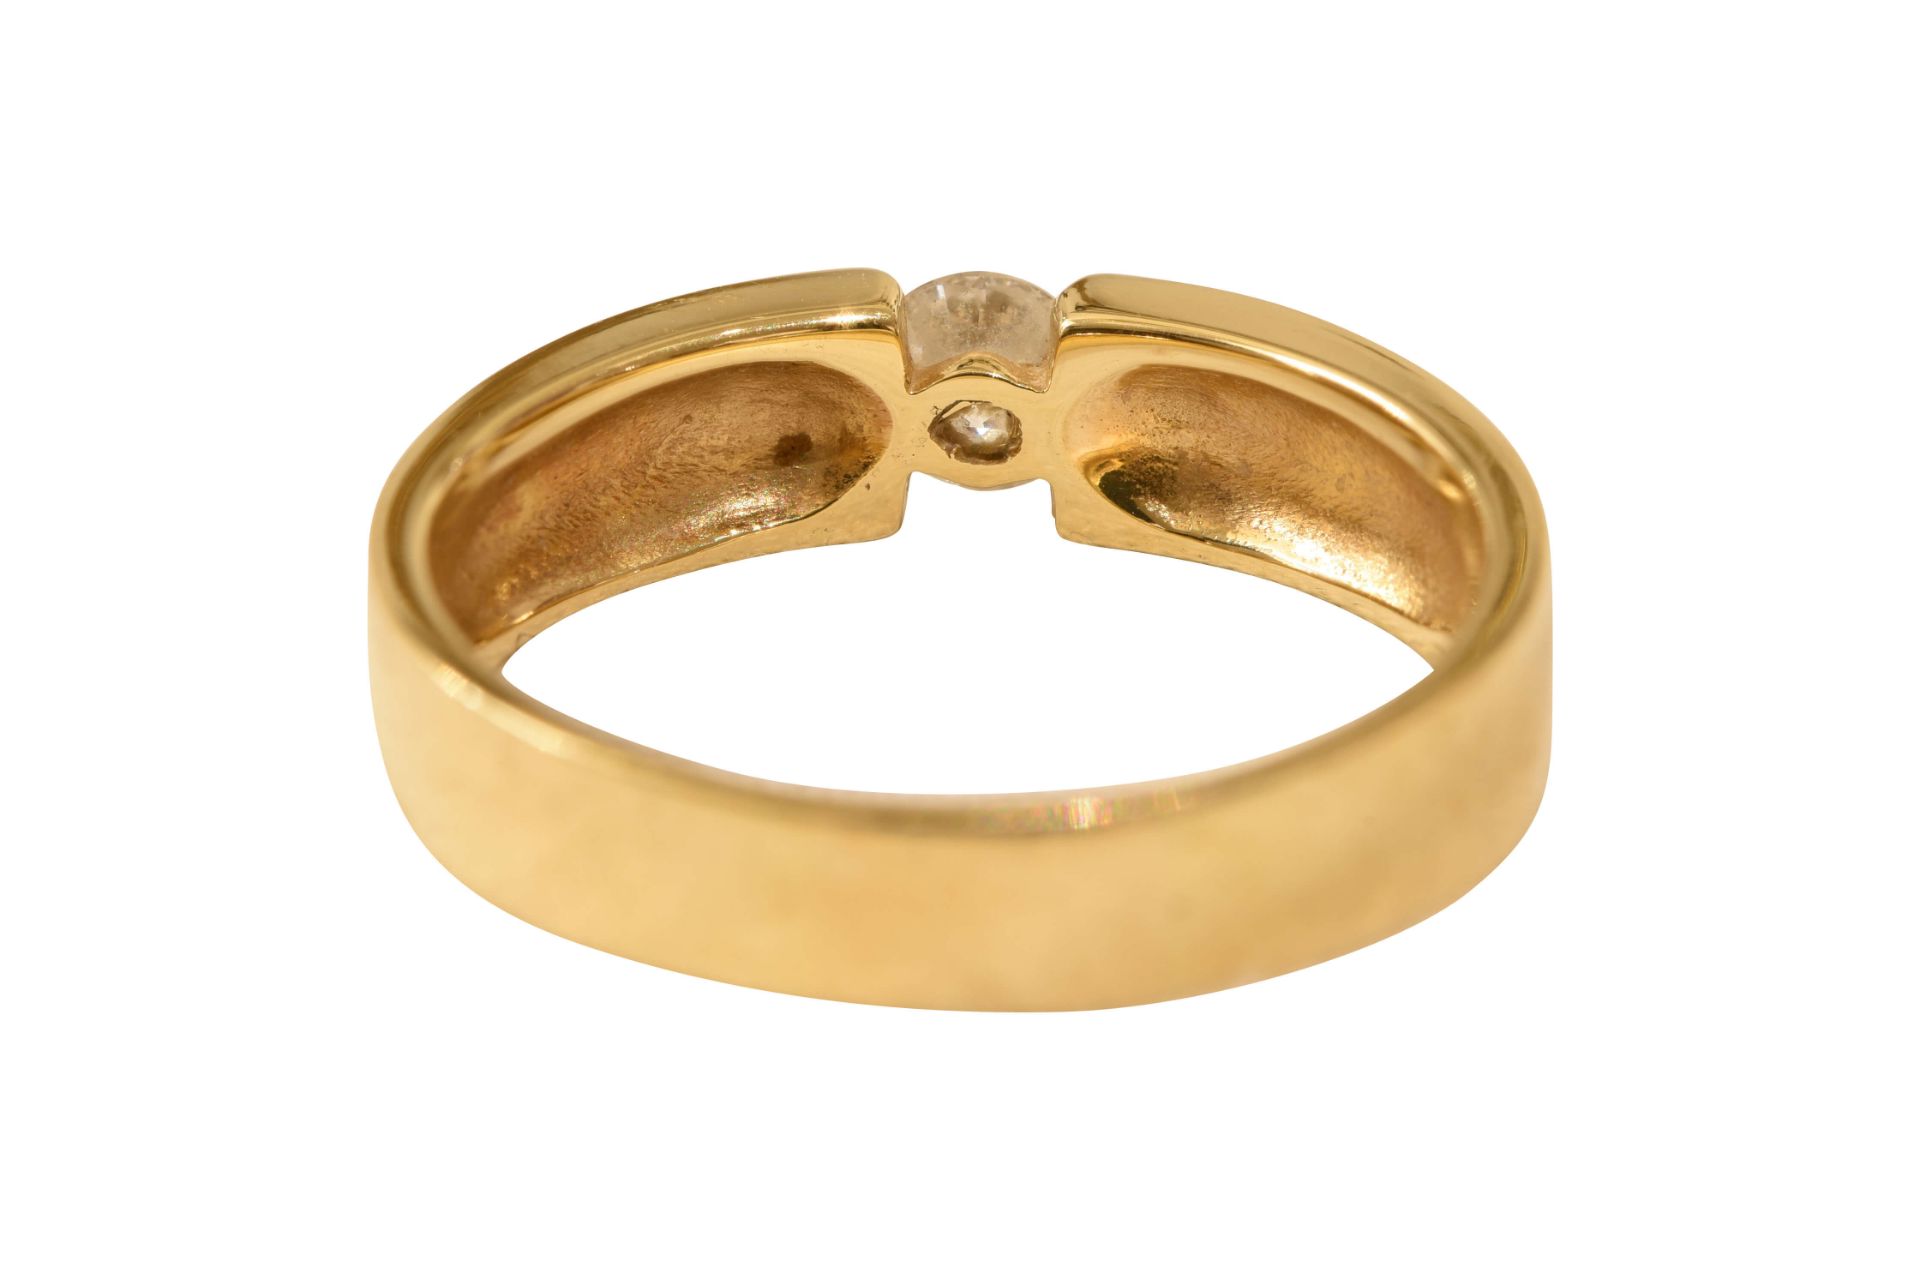 Ring GG mit einem Brillanten|Ring with one Brilliant-Cut Diamond - Image 5 of 5